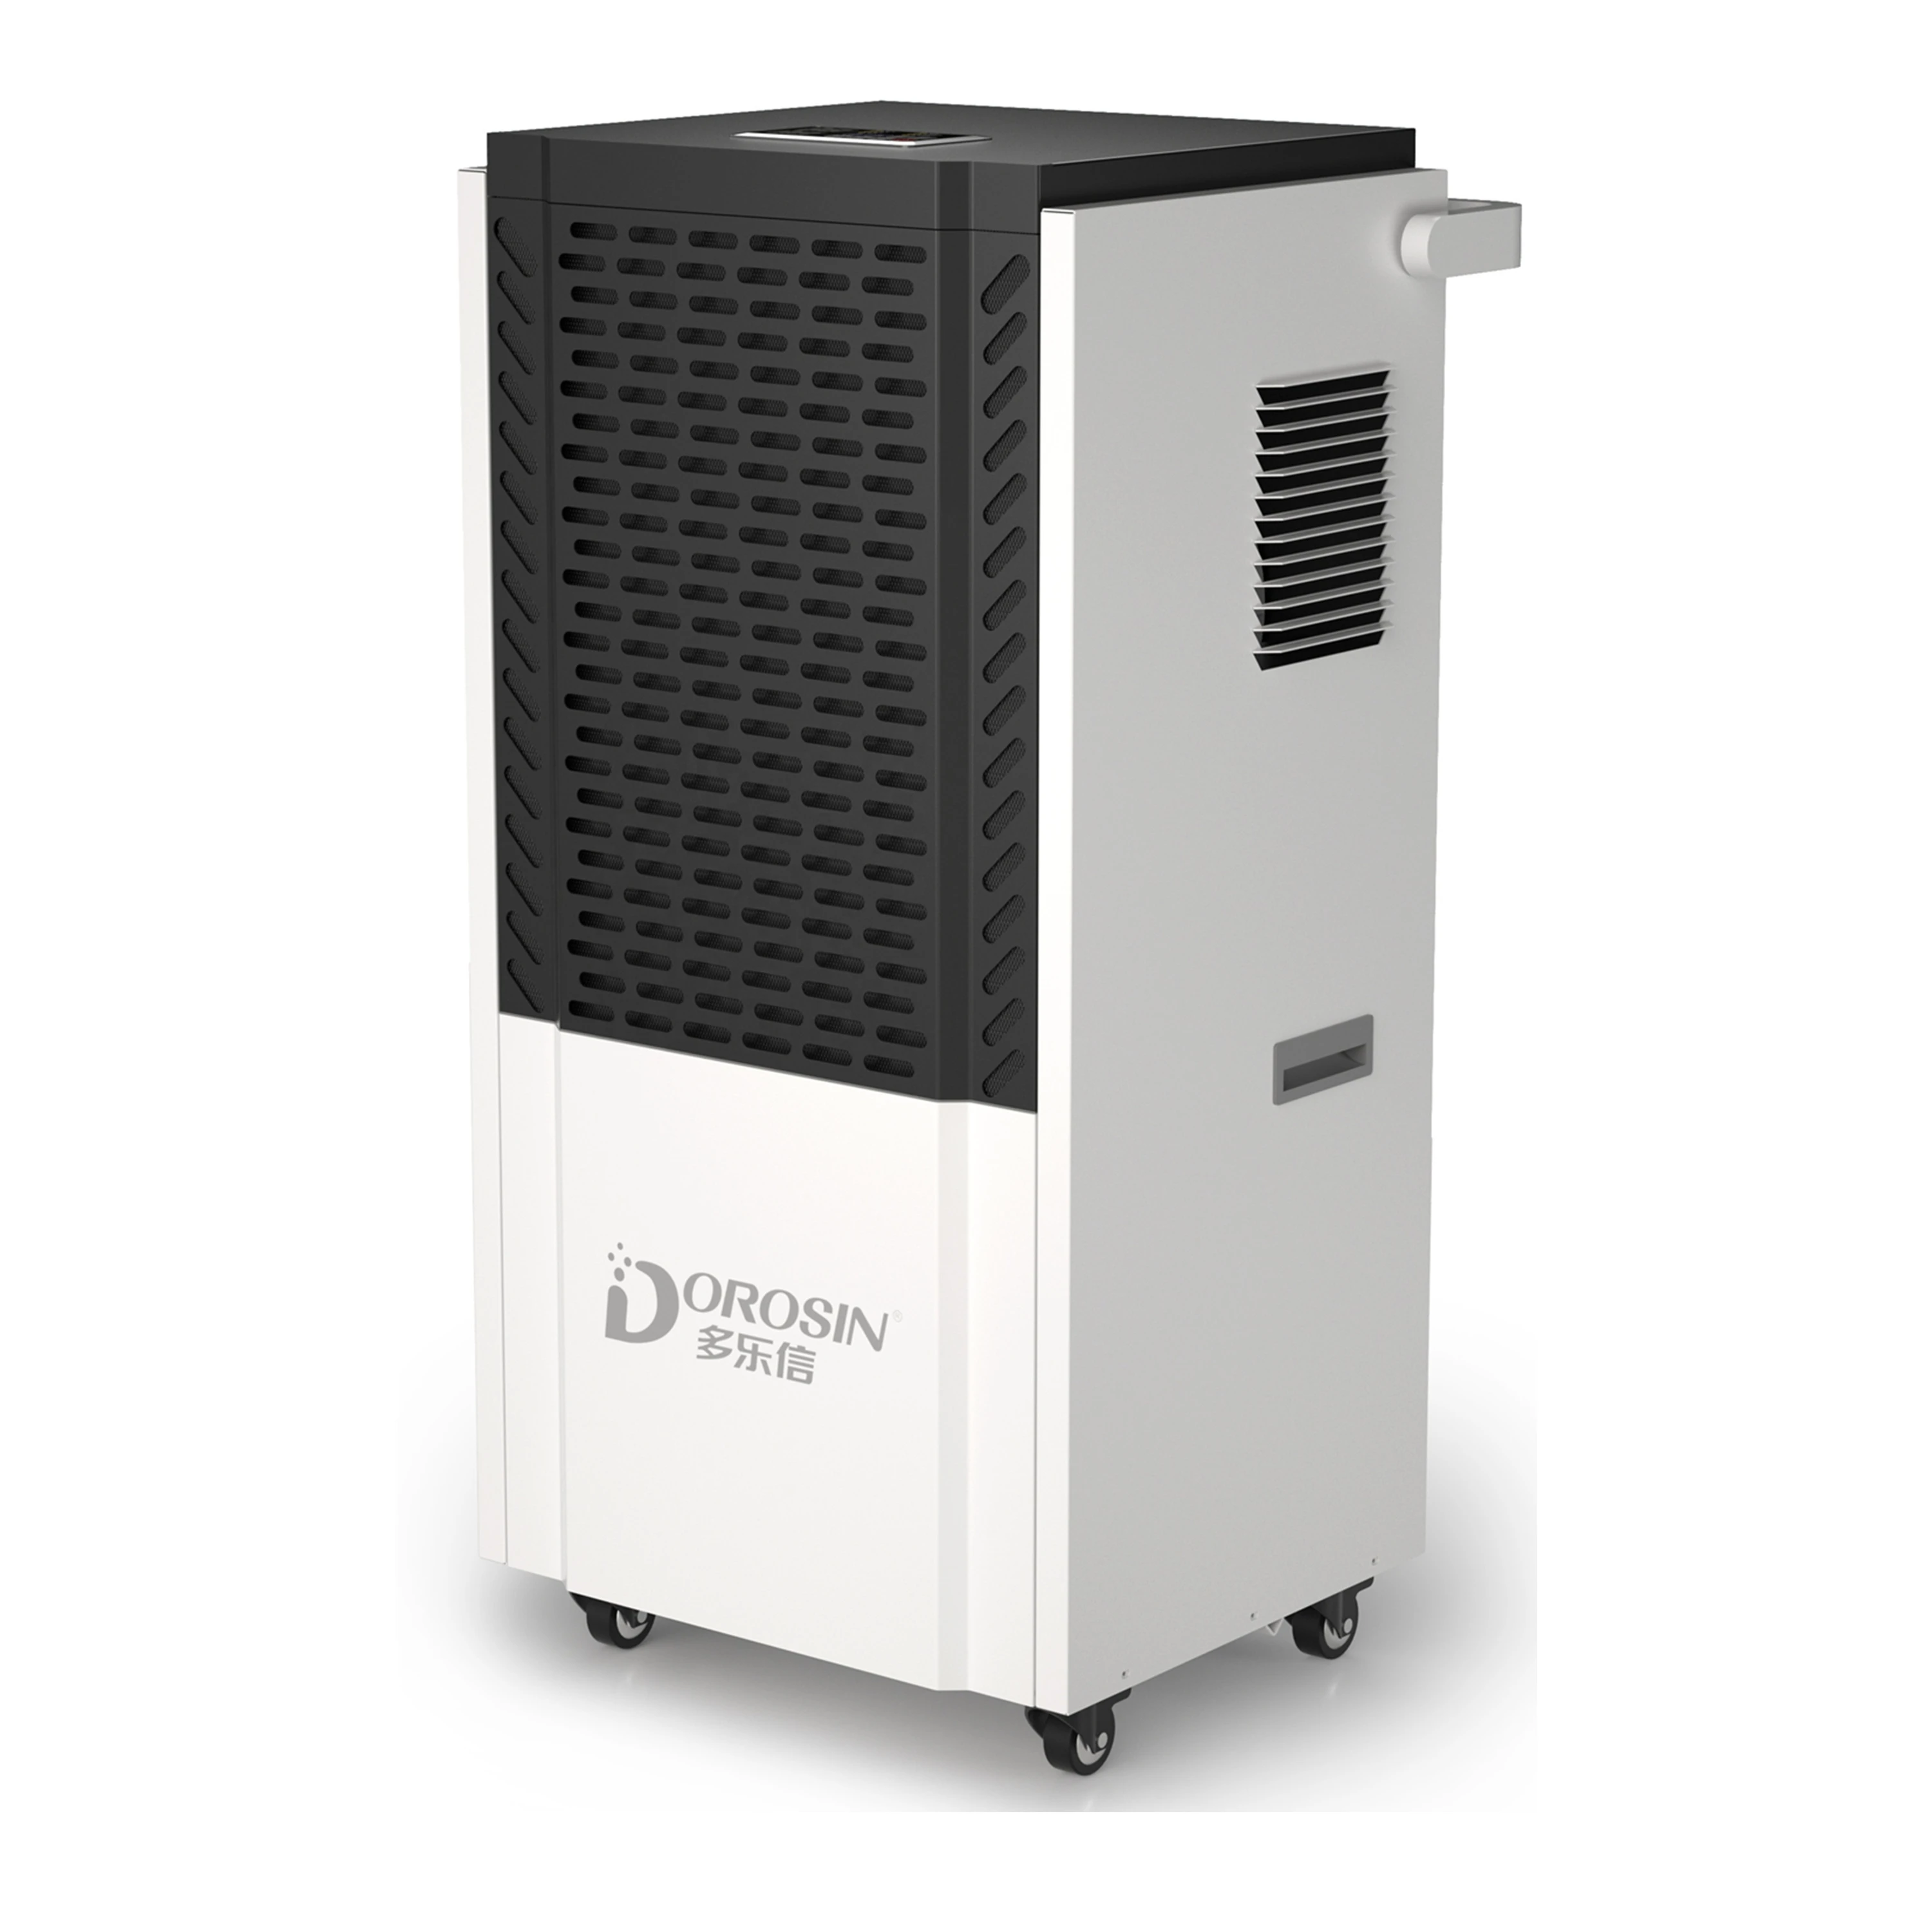 Dorosin hand push industrial compressor air dehumidifier for  data room temporary dehumidification